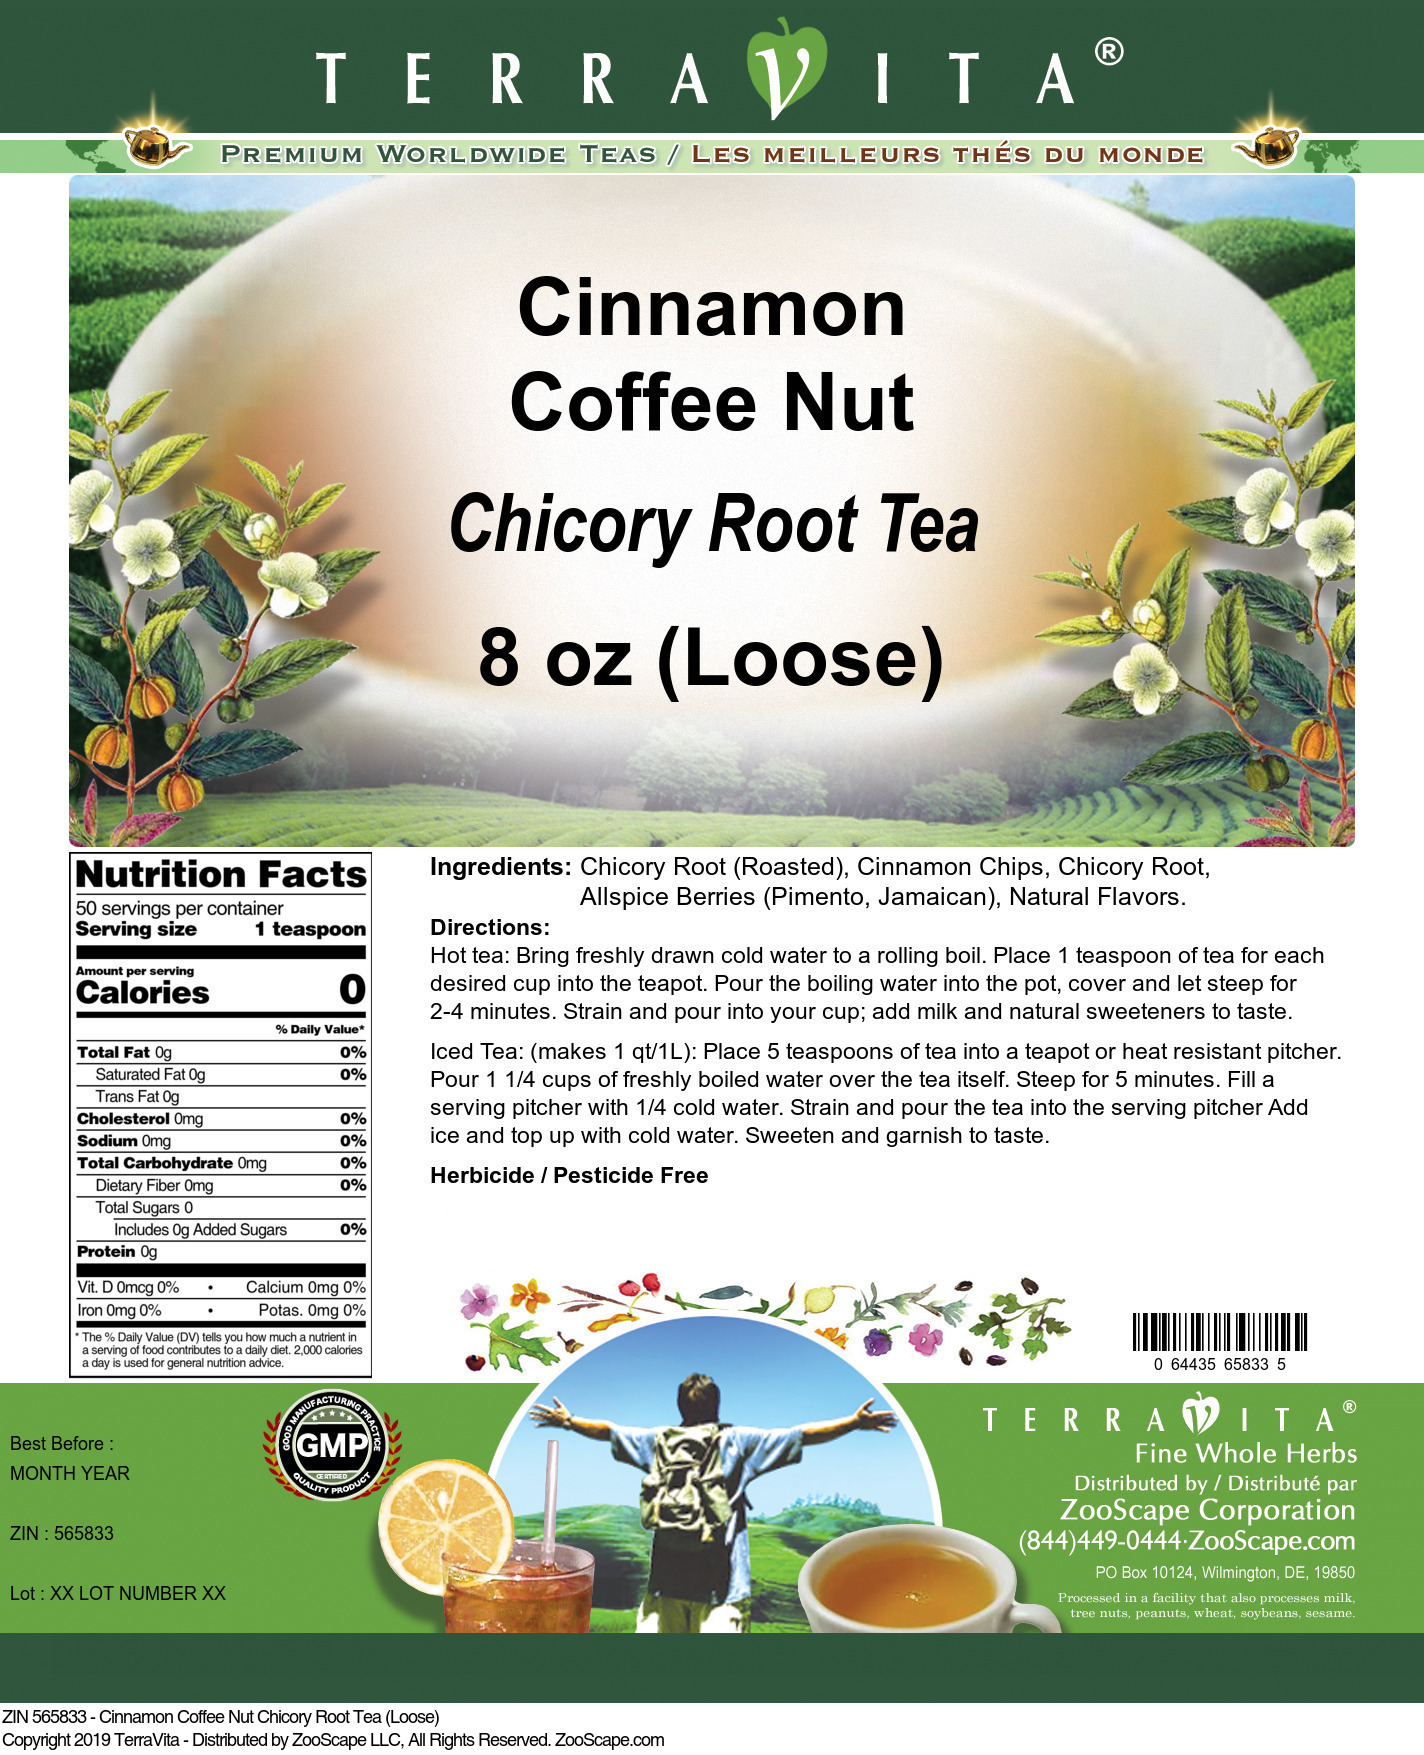 Cinnamon Coffee Nut Chicory Root Tea (Loose) - Label